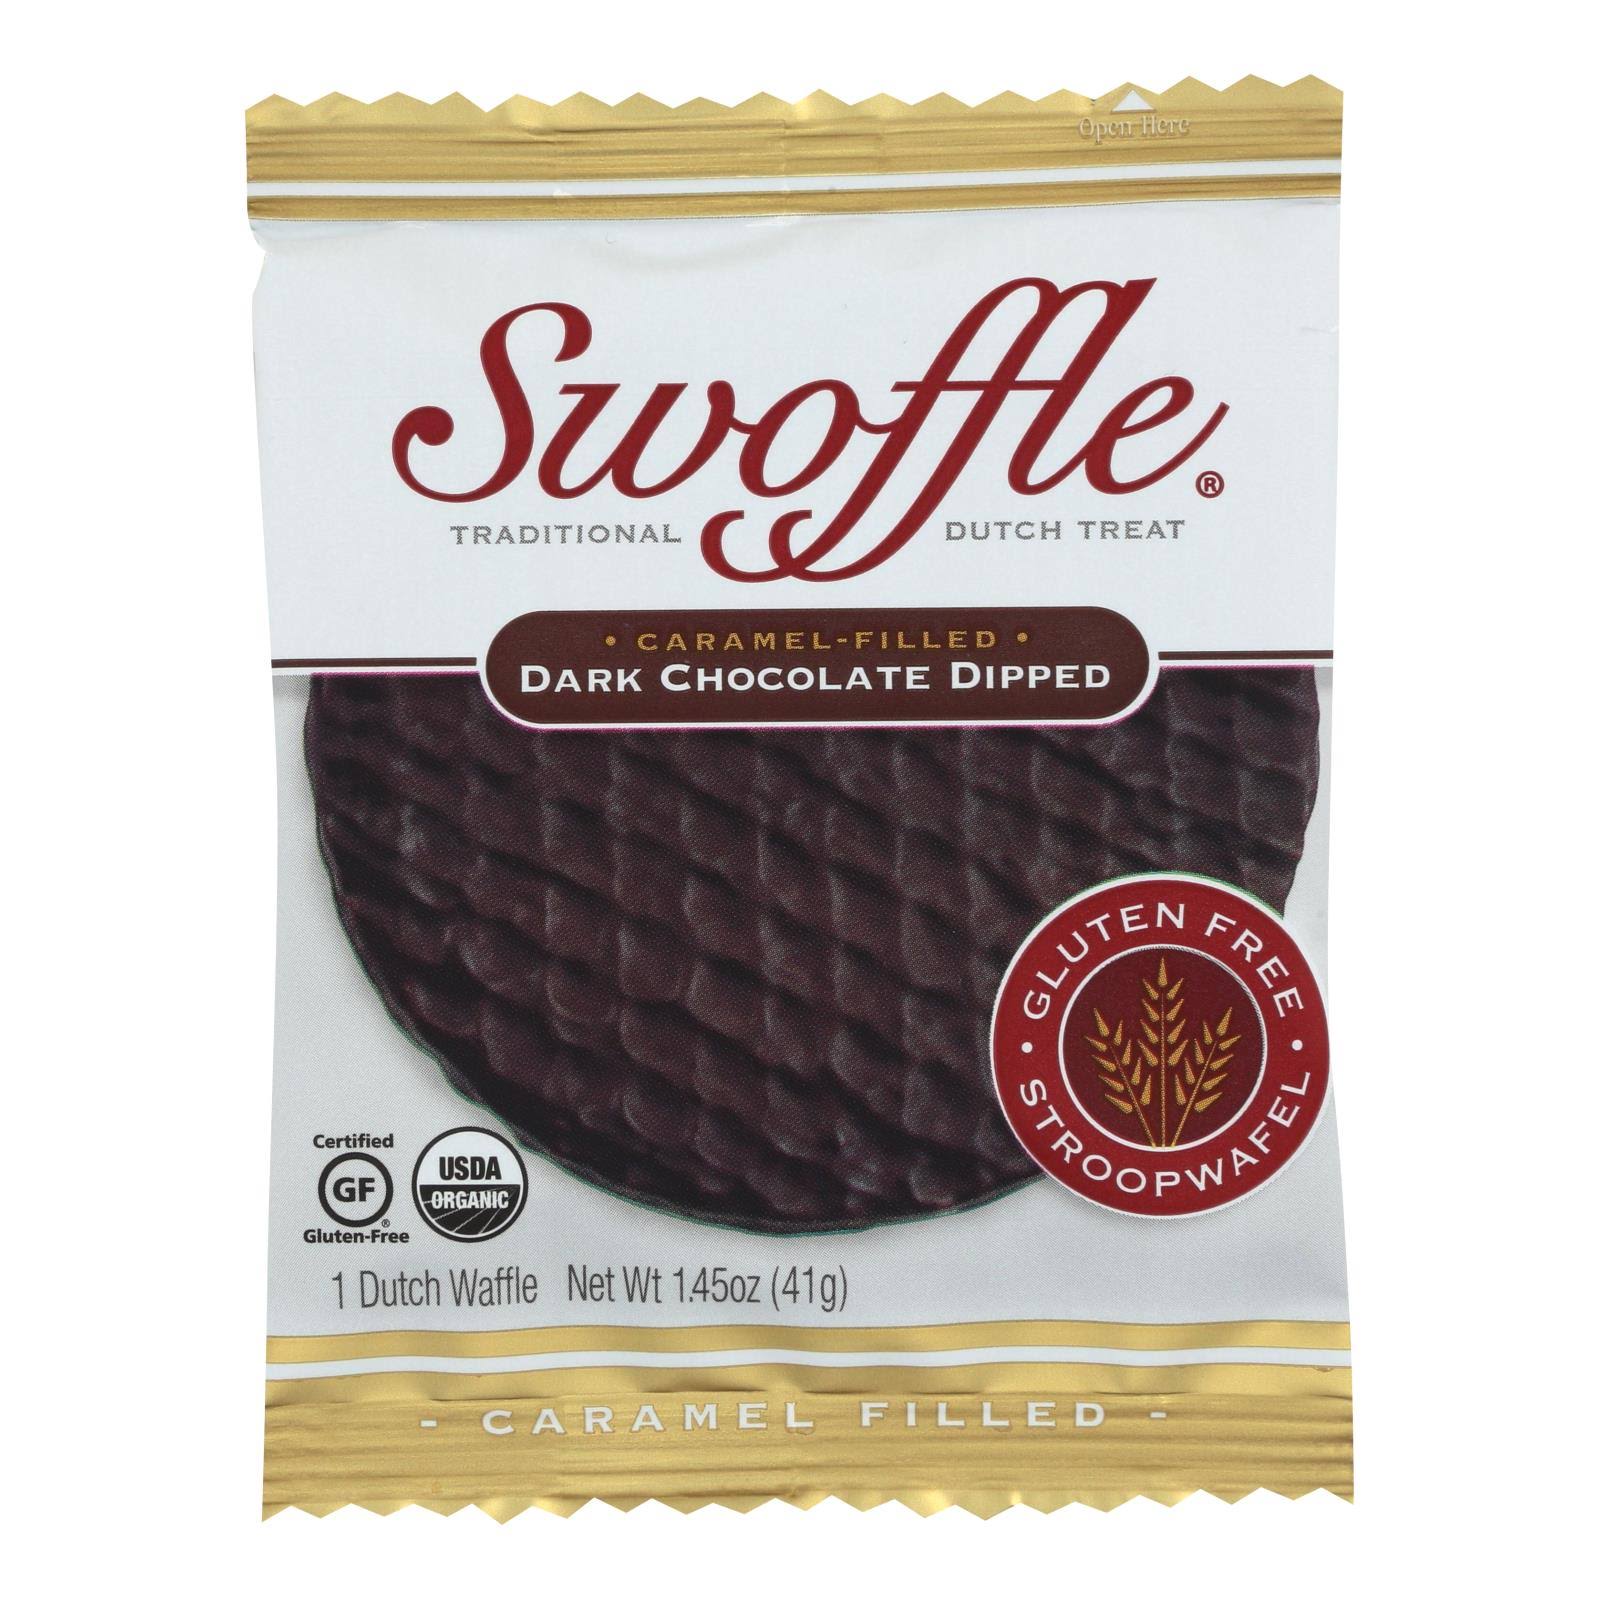 Swoffle Dark Chocolate Dipped 1 Dutch Waffle - Pack of 14 - 1.45 oz